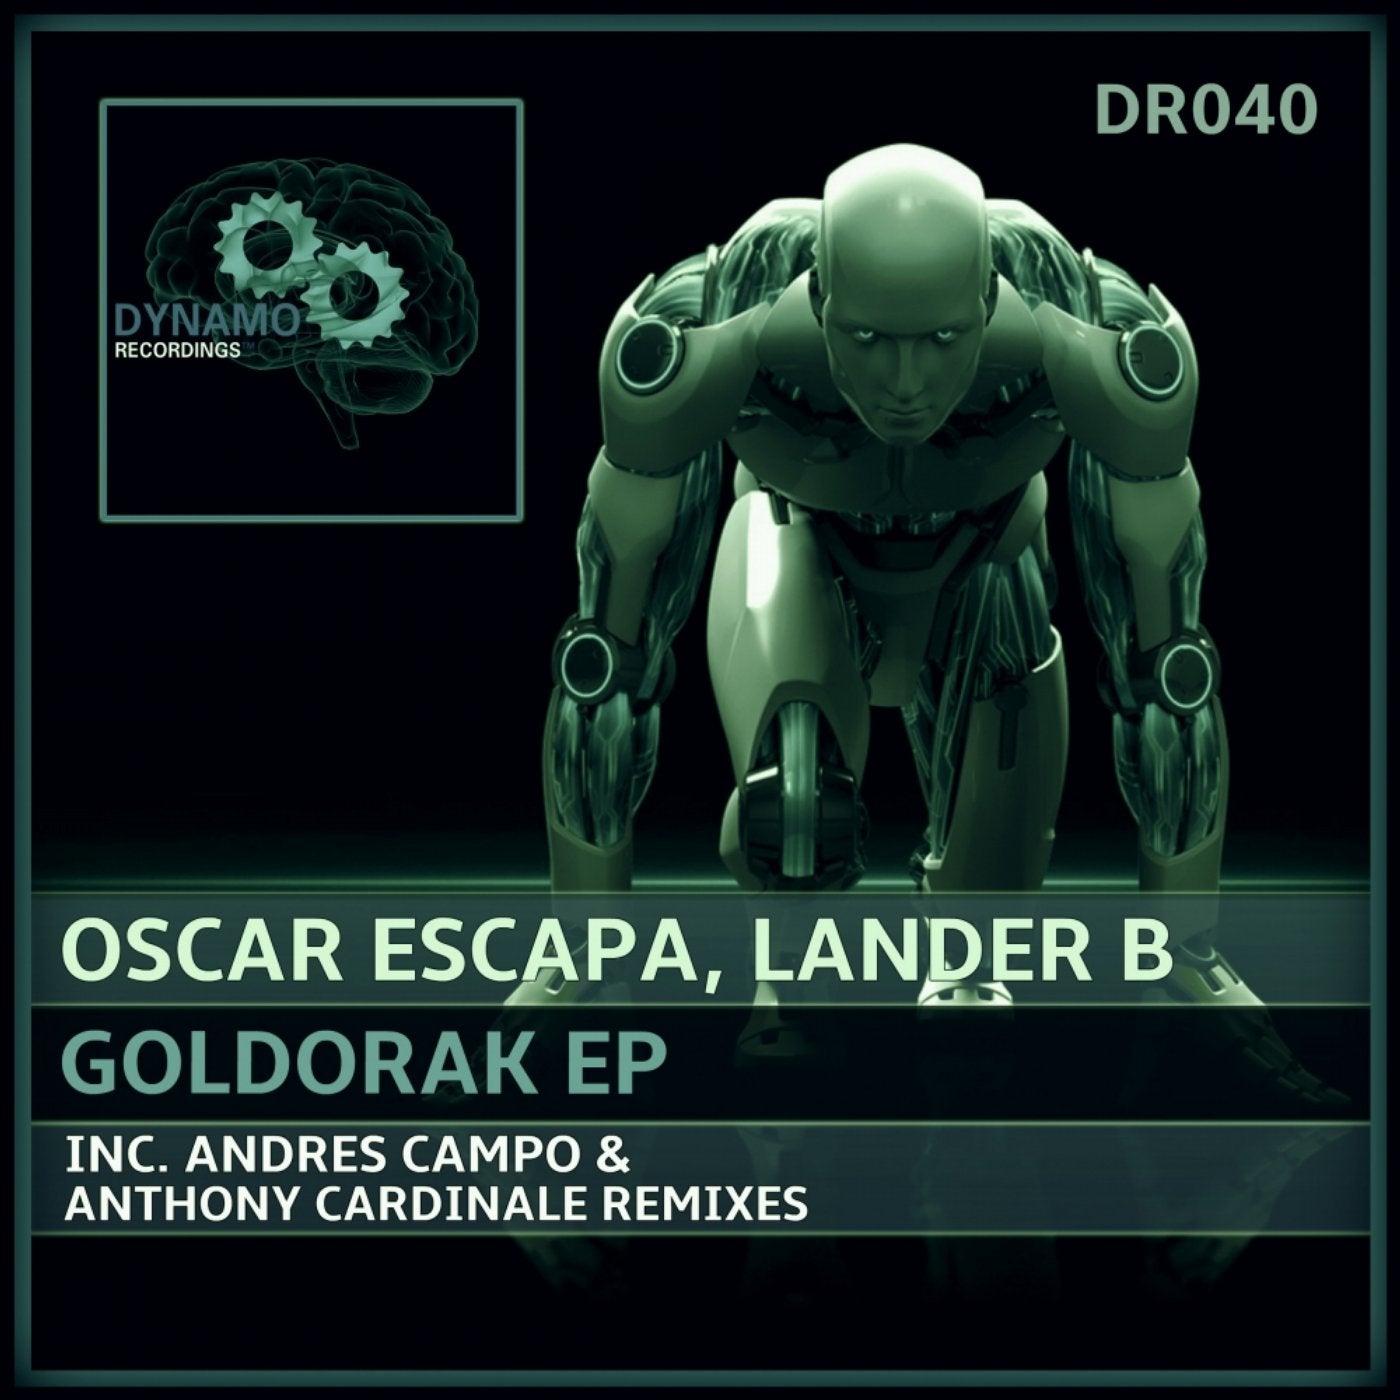 Goldorak EP